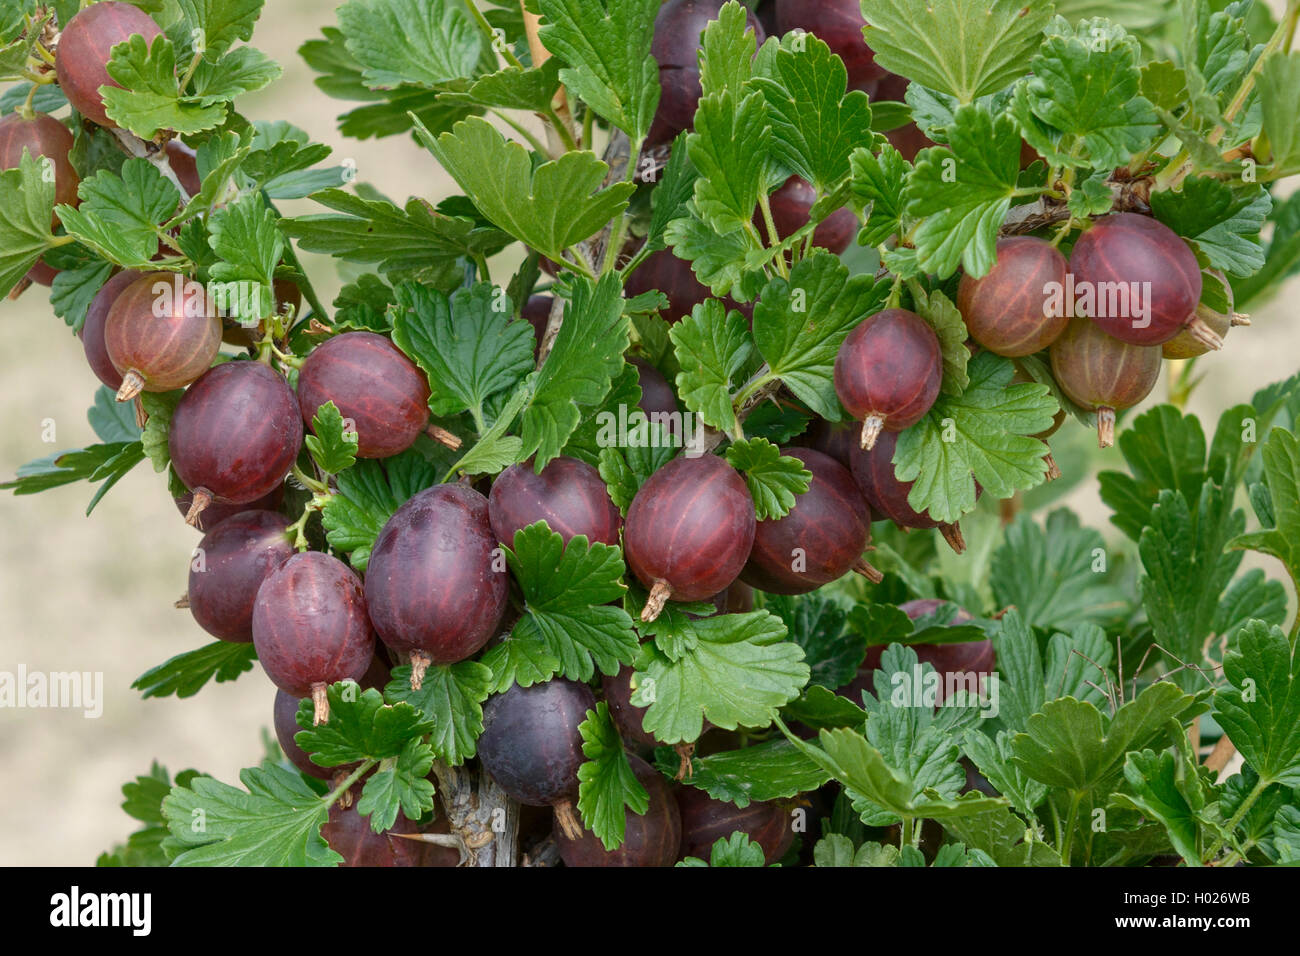 wild gooseberry, European gooseberry (Ribes uva-crispa 'Hinnonmaeki Rot', Ribes uva-crispa Hinnonmaeki Rot), cultivar Hinnonmaeki Rot, Germany, Saxony Stock Photo